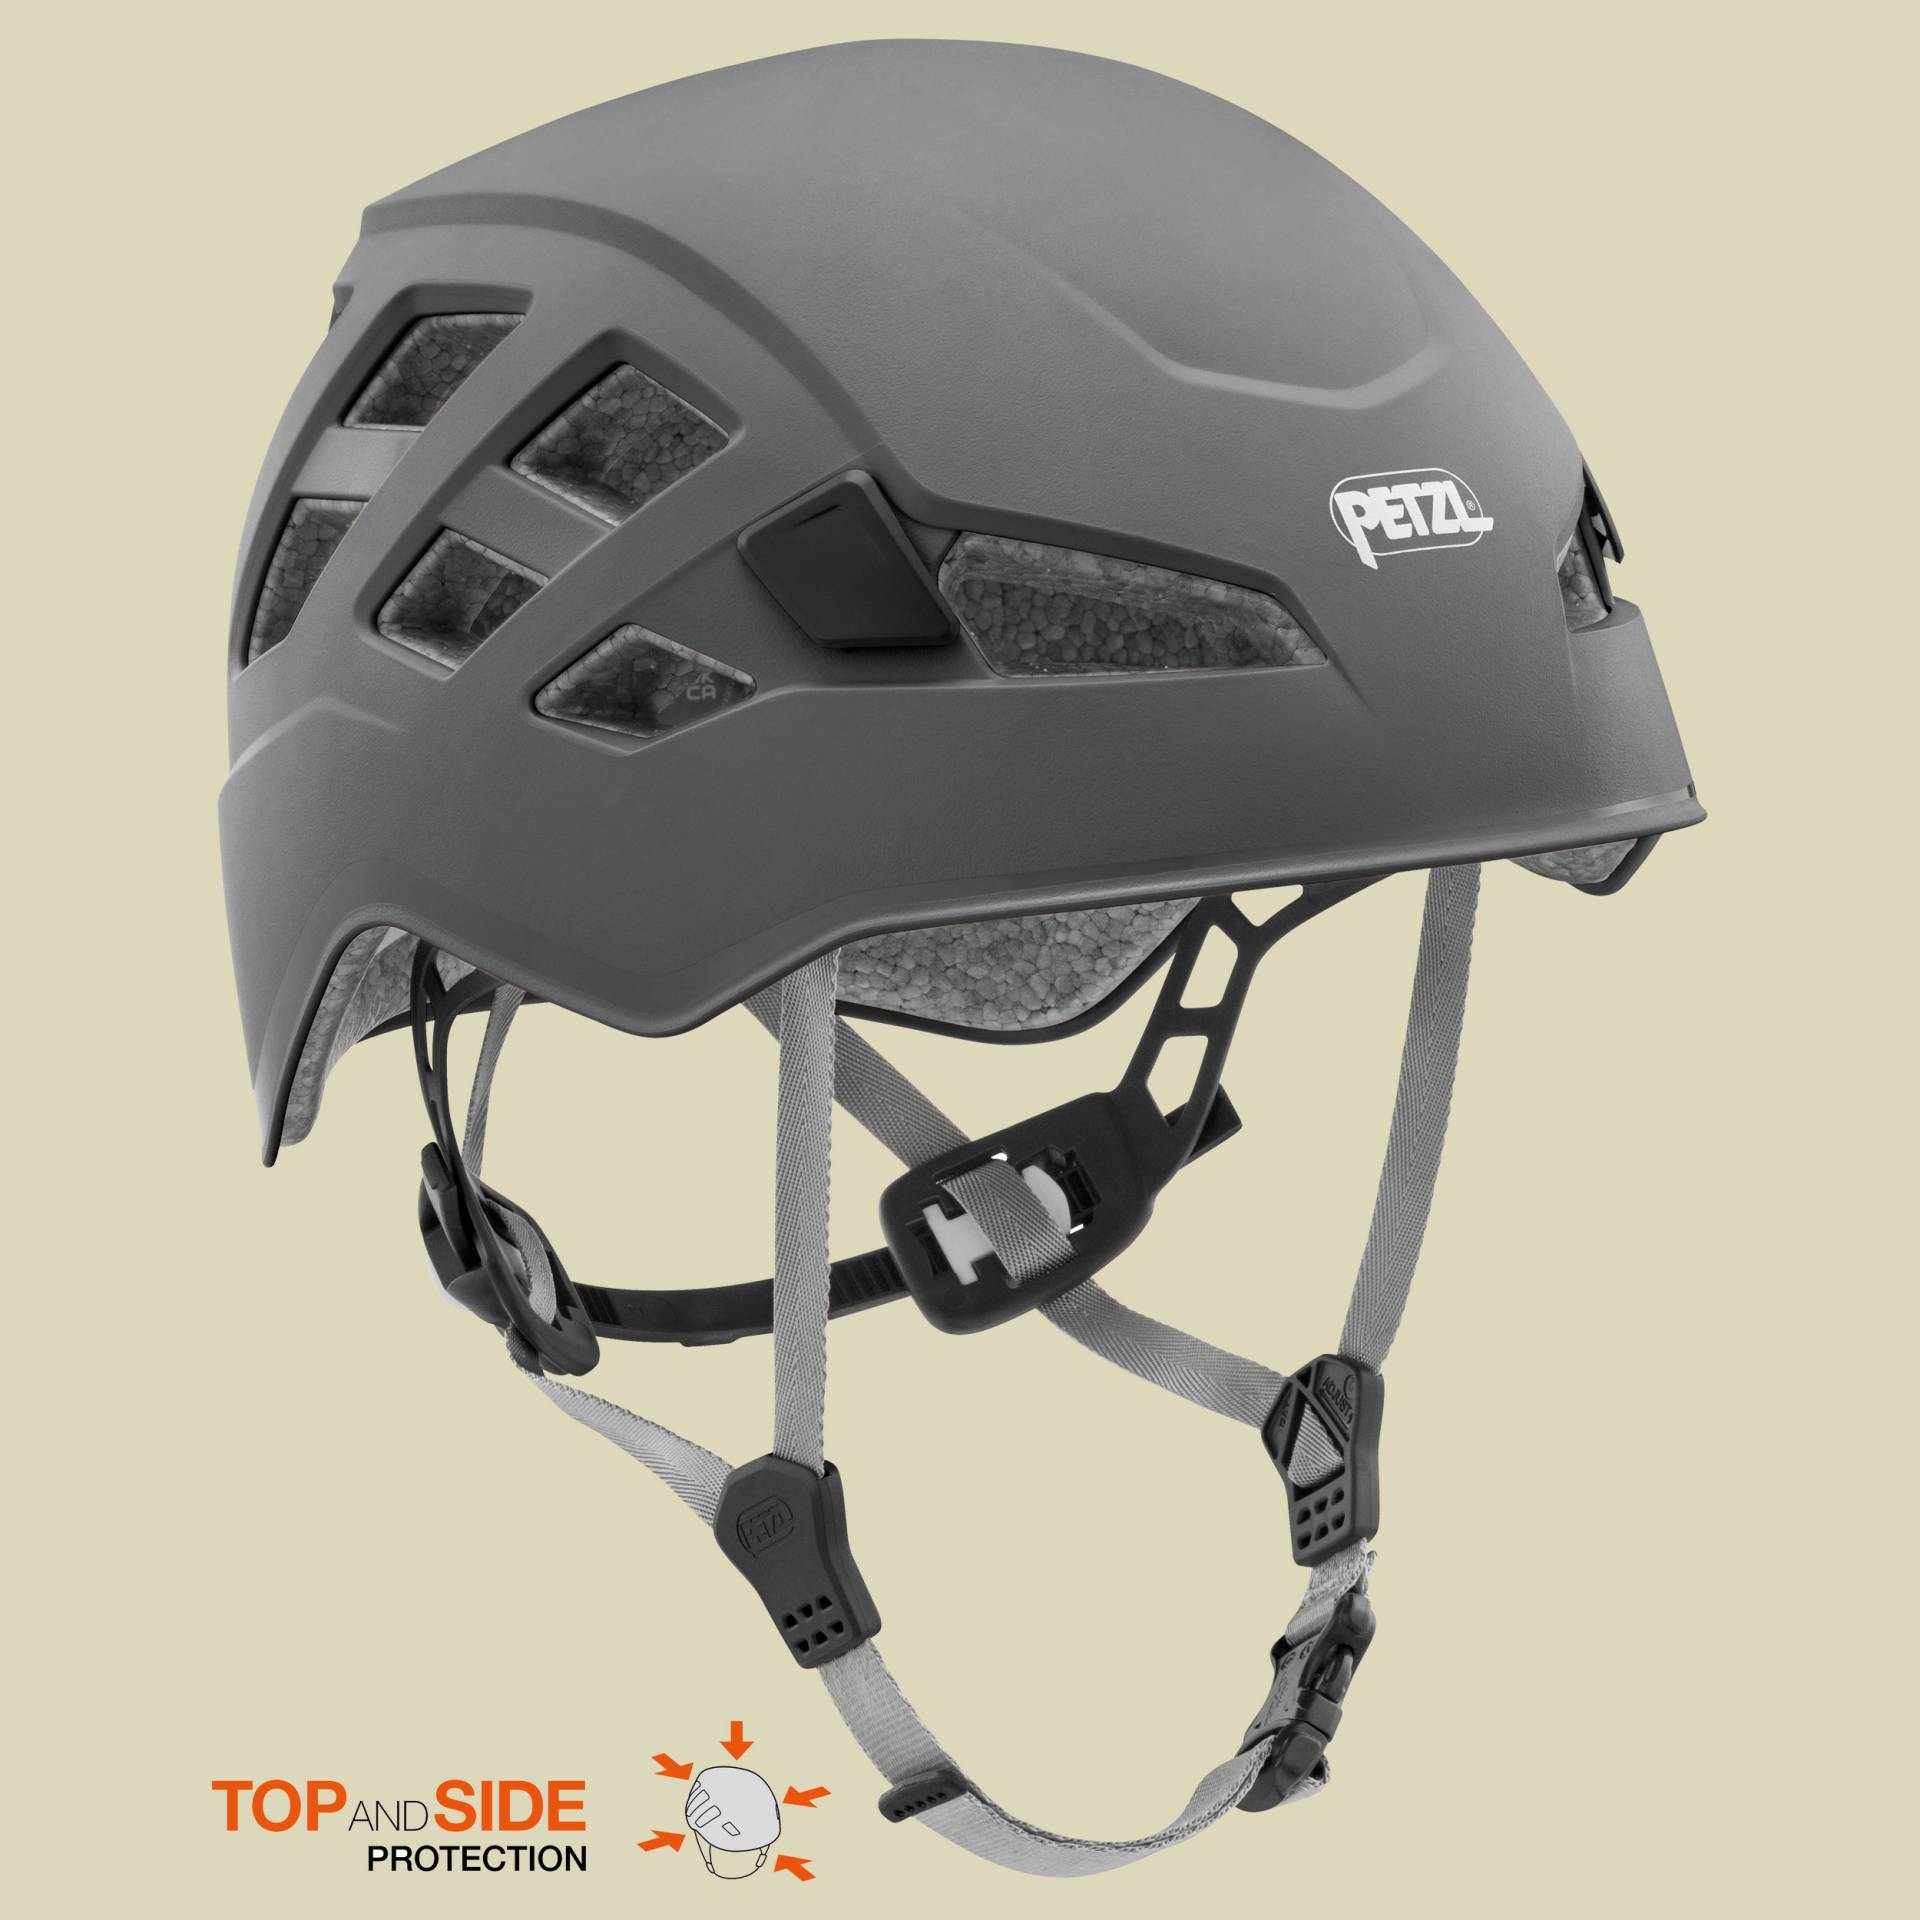 Boreo Helm Größe S/M Farbe grau von Petzl